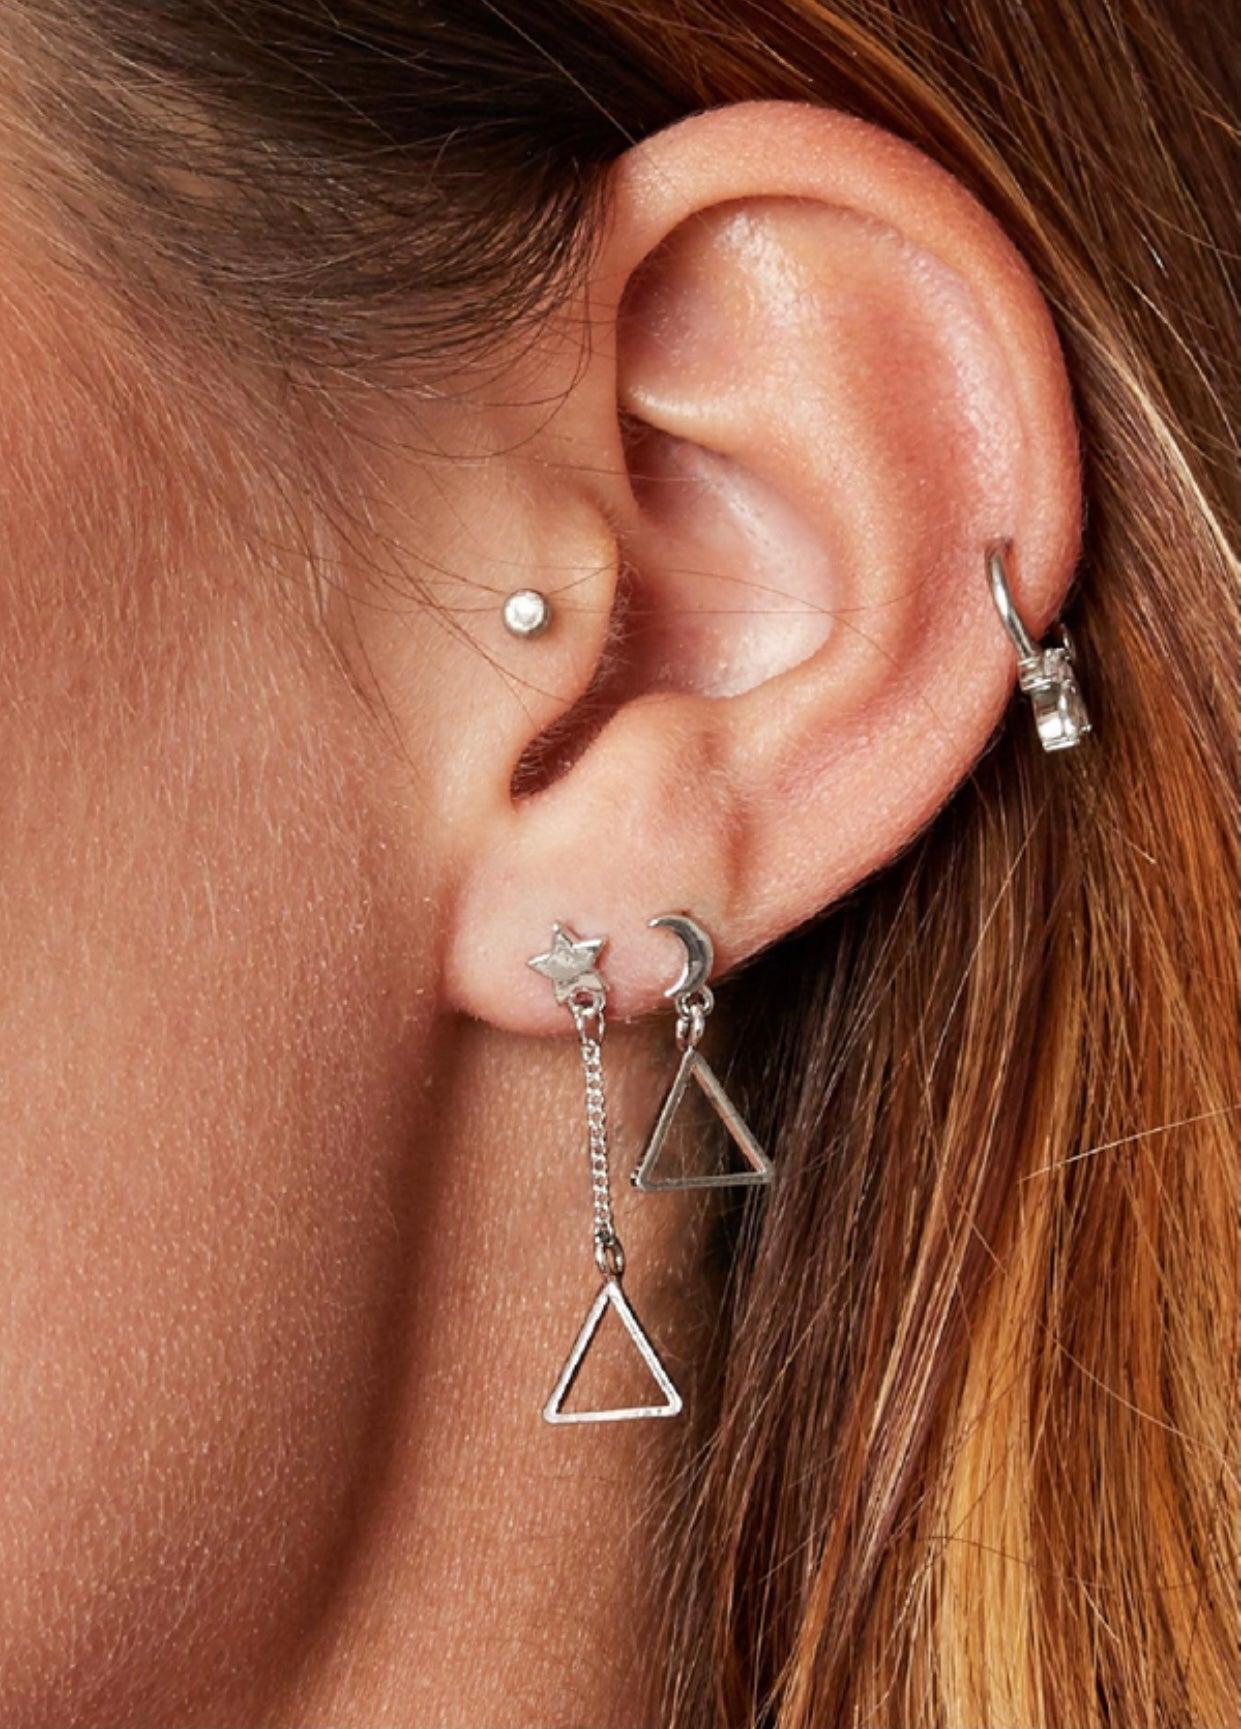 Earrings Triangular Space - Amazing wardrobe